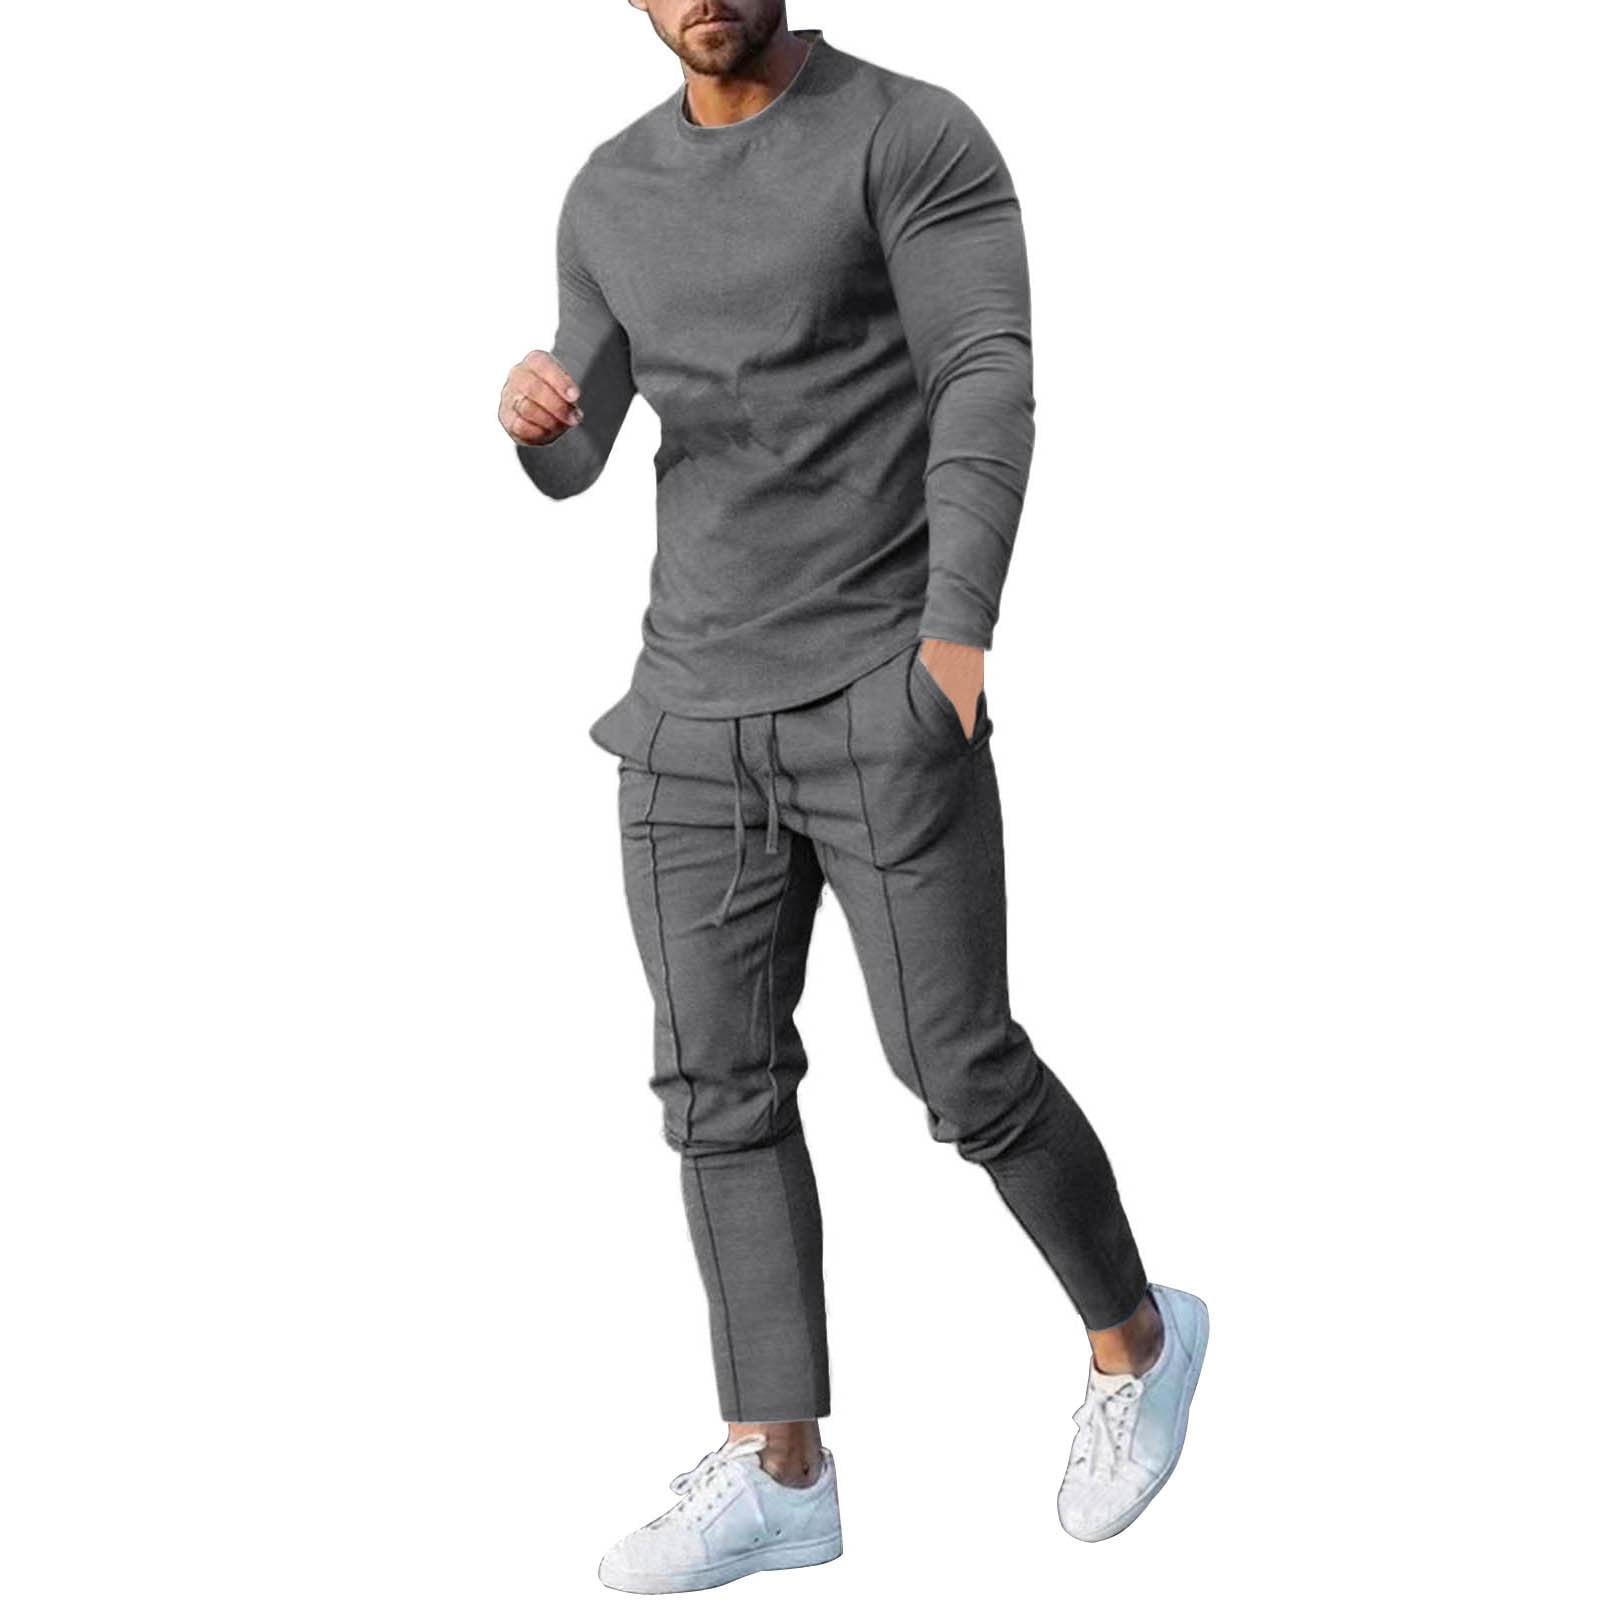 Hfyihgf Men's Tracksuit 2 Piece Long Sleeve Pullover Jogging Track Suit  Athletic Casual Slim Fit Sweatsuit(Black,M) 